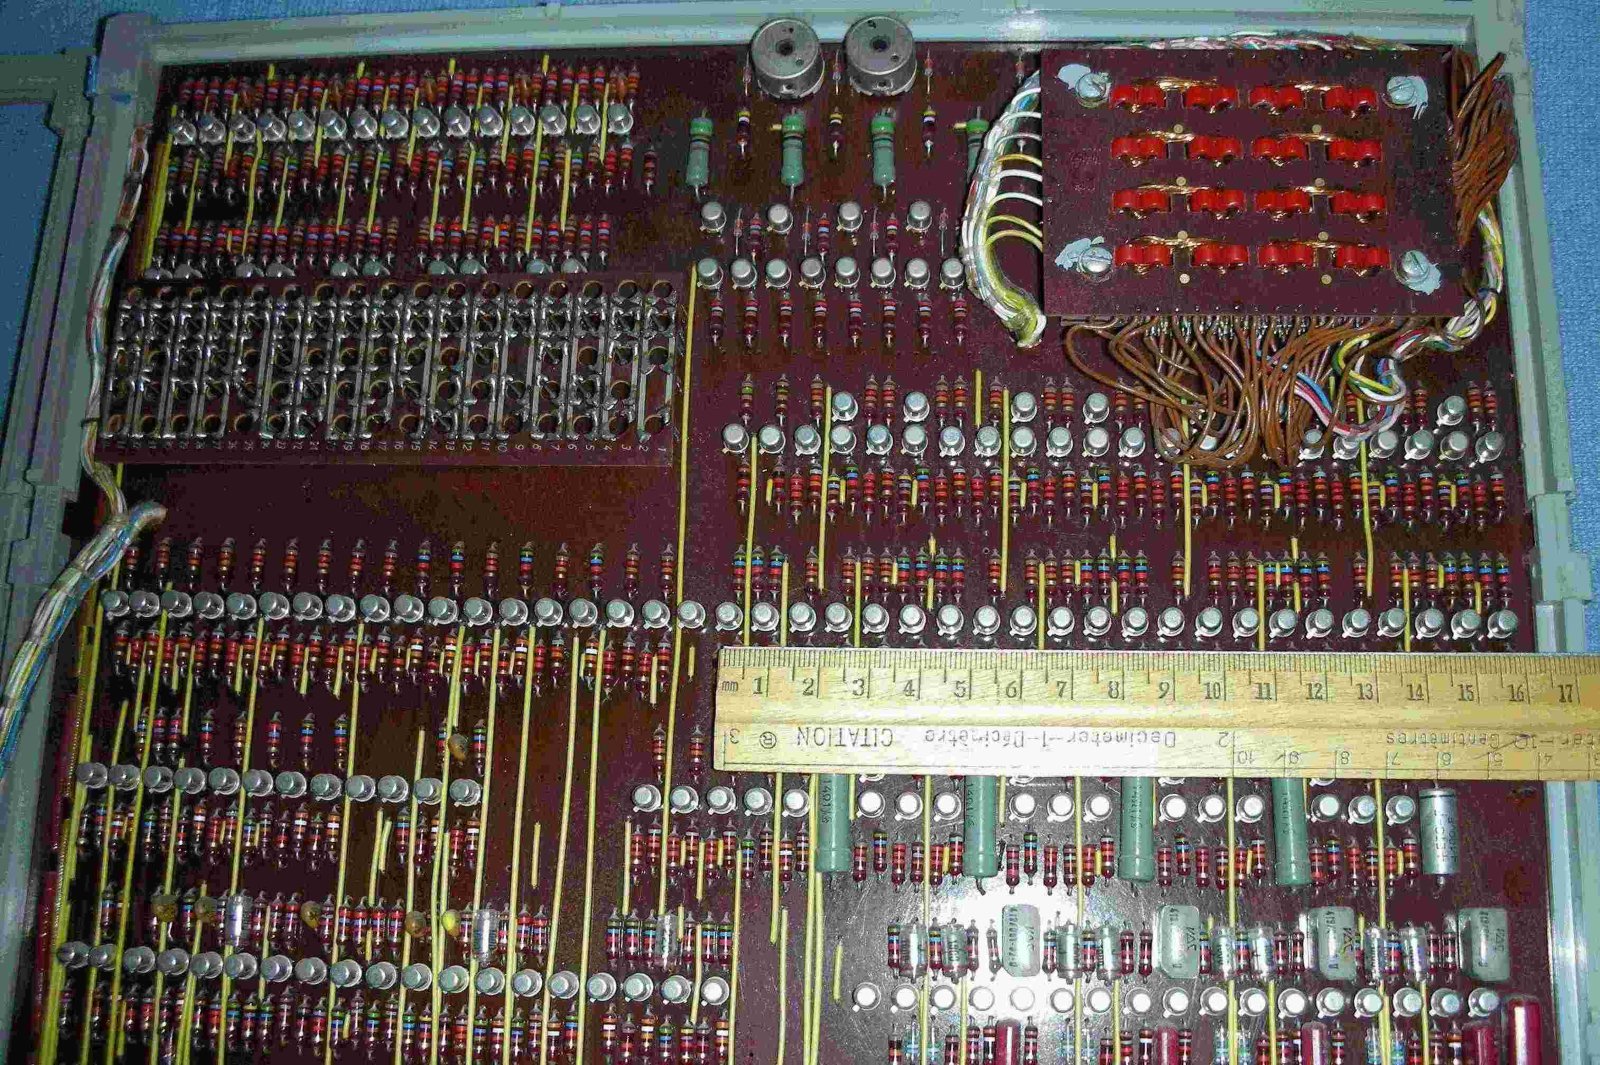 cores: 4 x 8 bit registers on a CPU